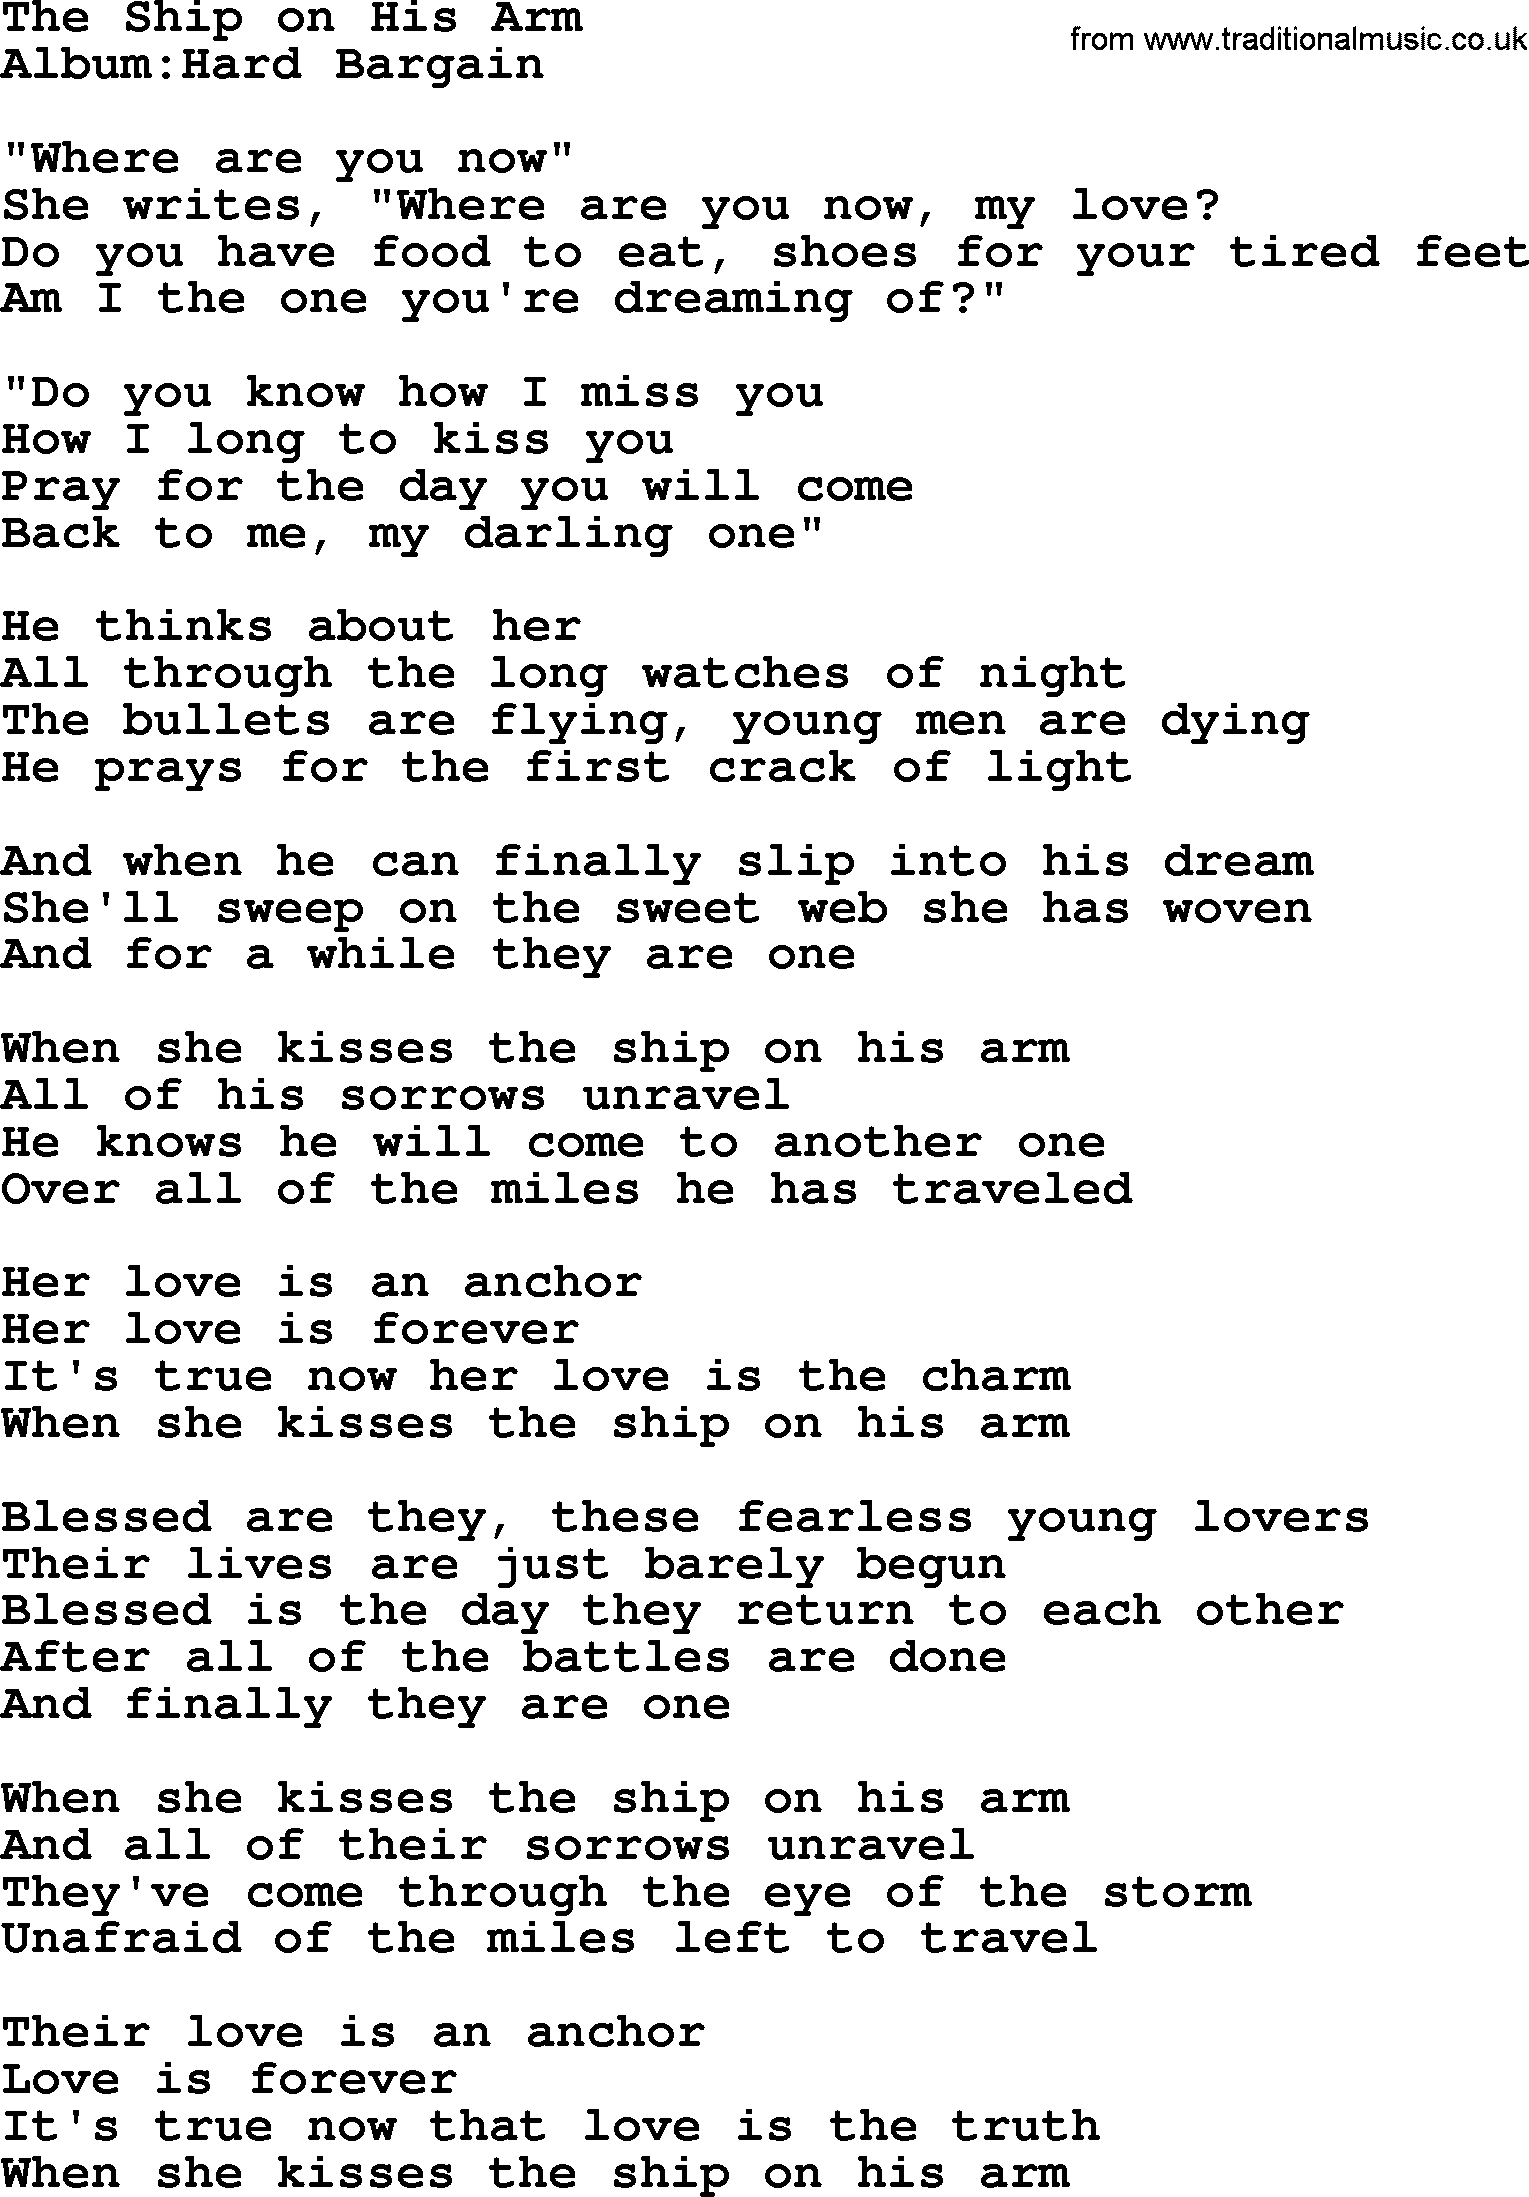 Emmylou Harris song: The Ship on His Arm lyrics